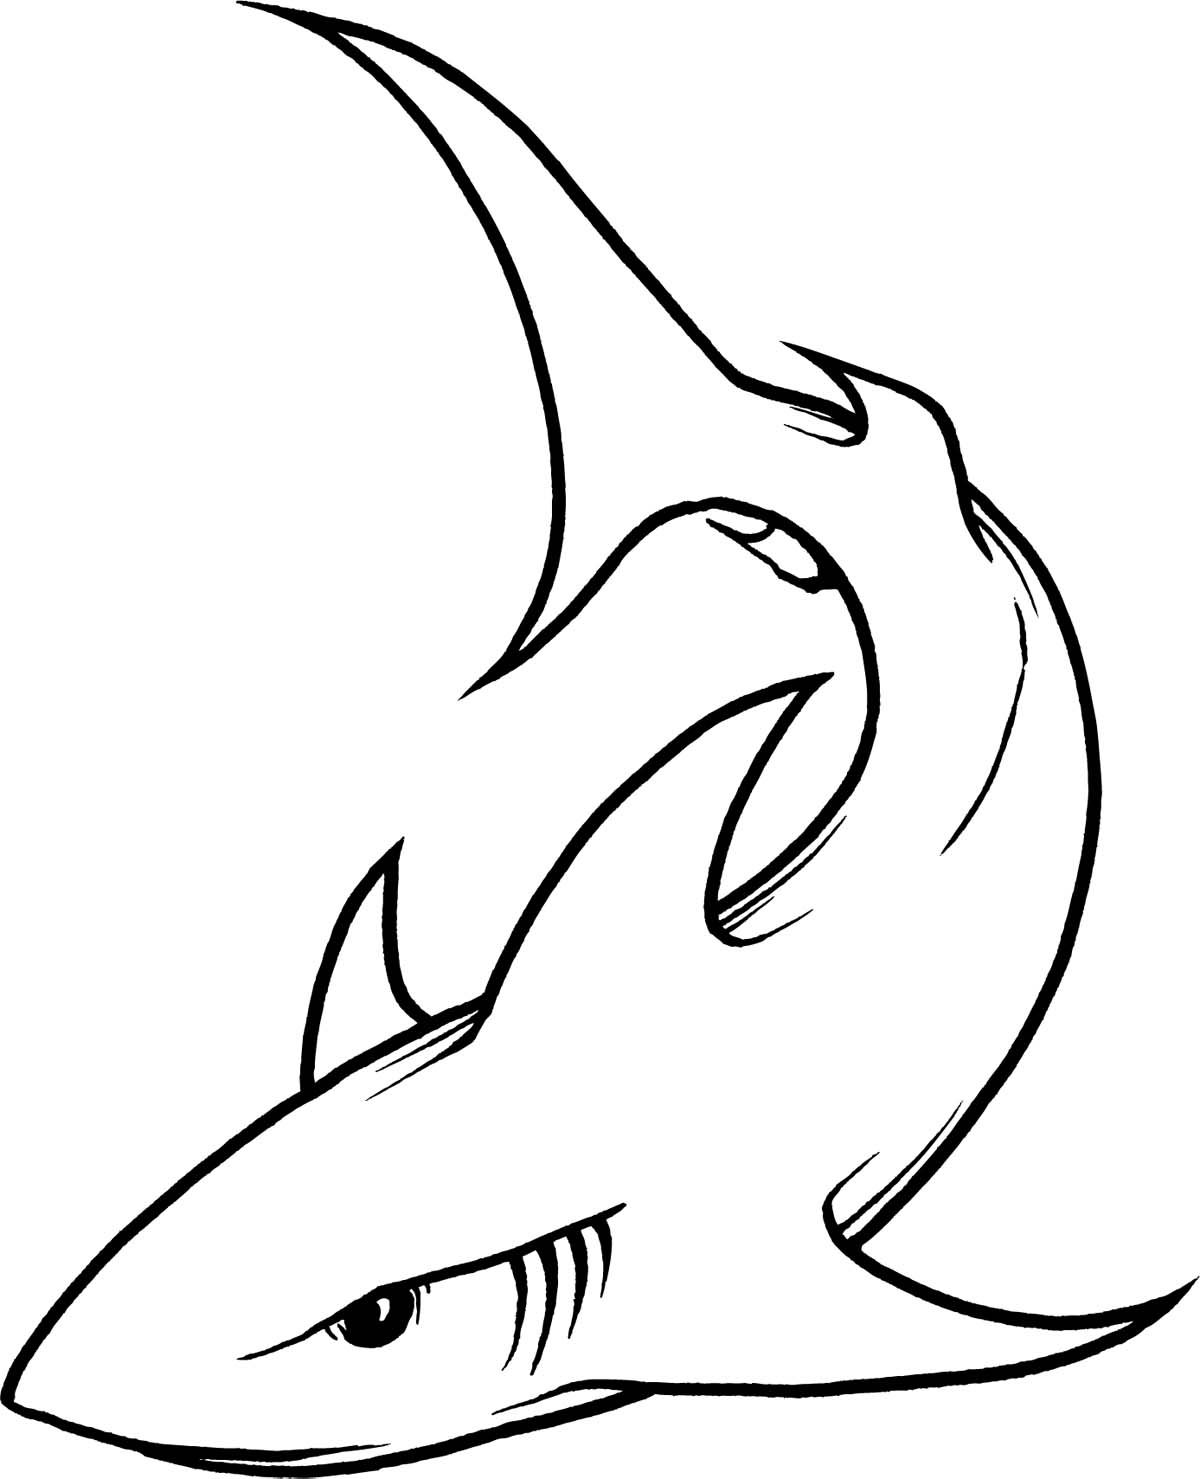 Shark Line Drawing - ClipArt Best